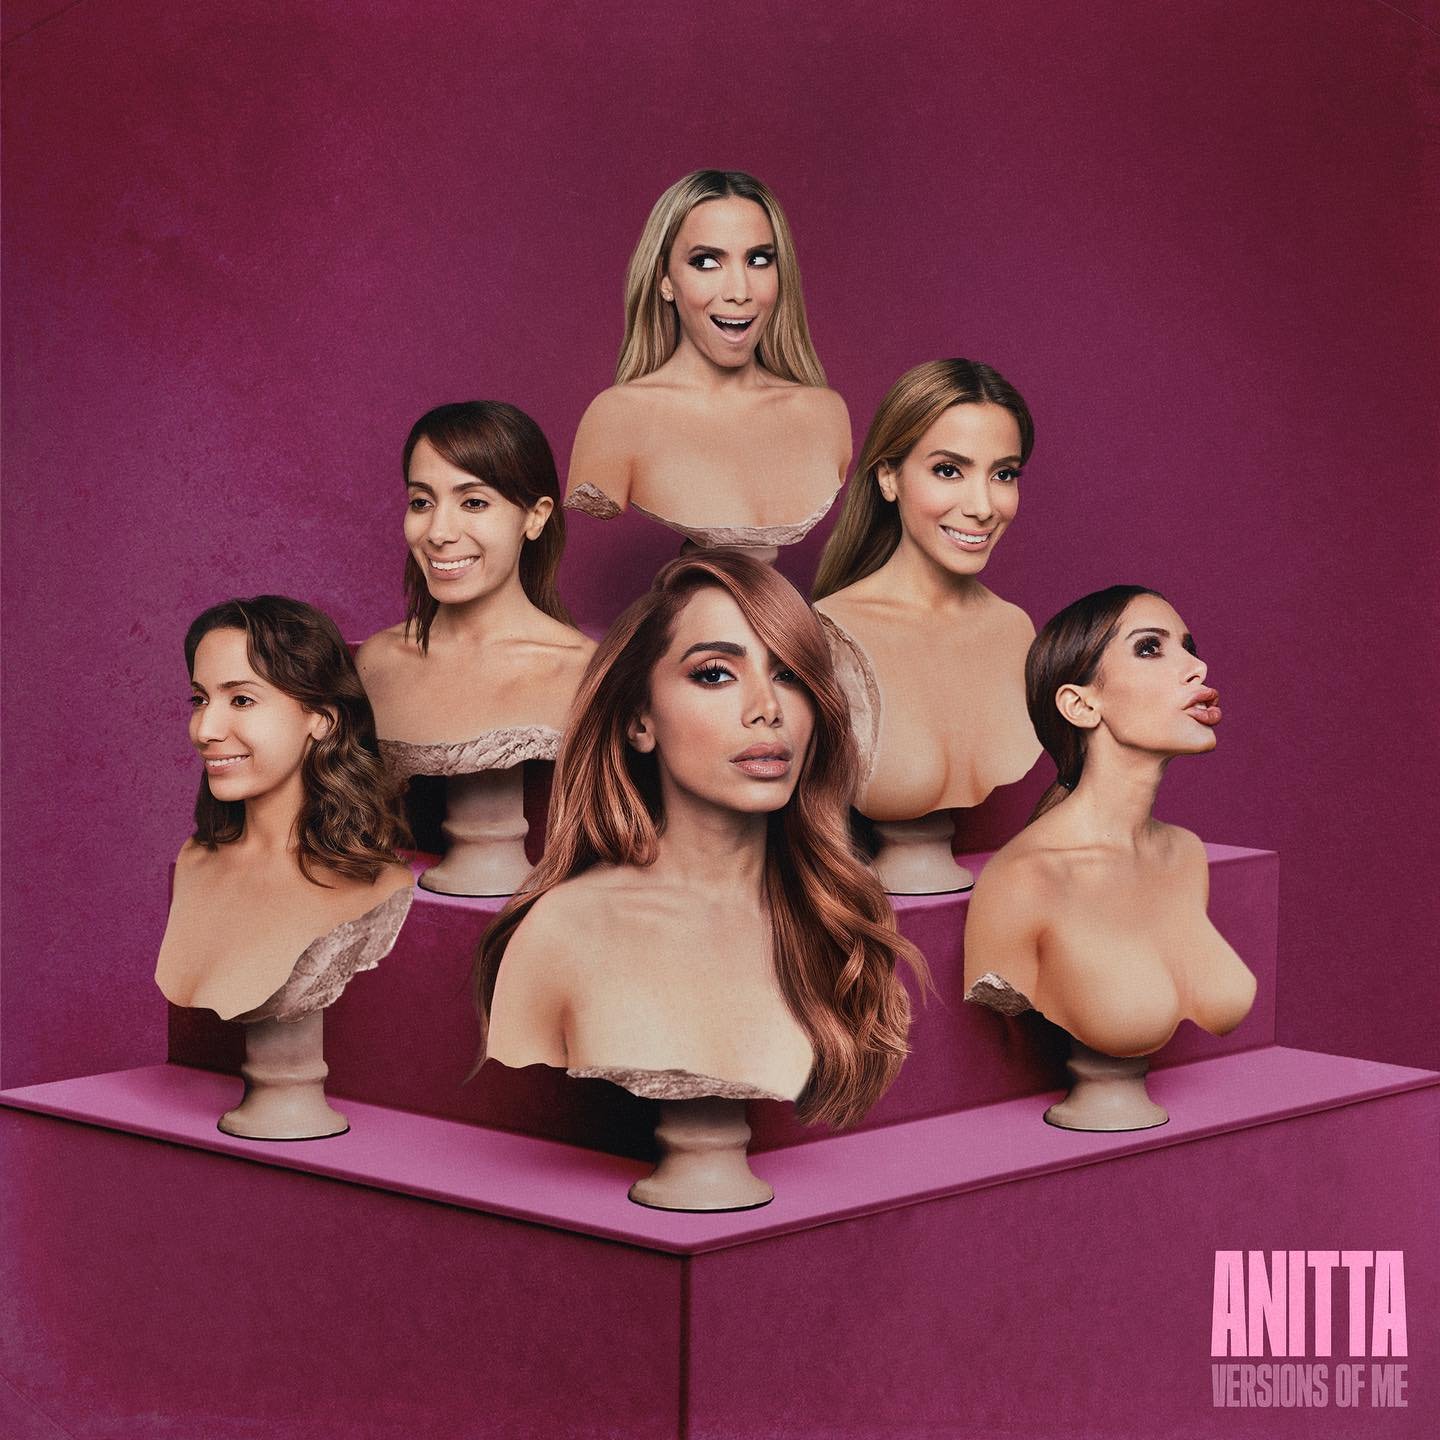 Anitta em Capa do Album Versions of Me